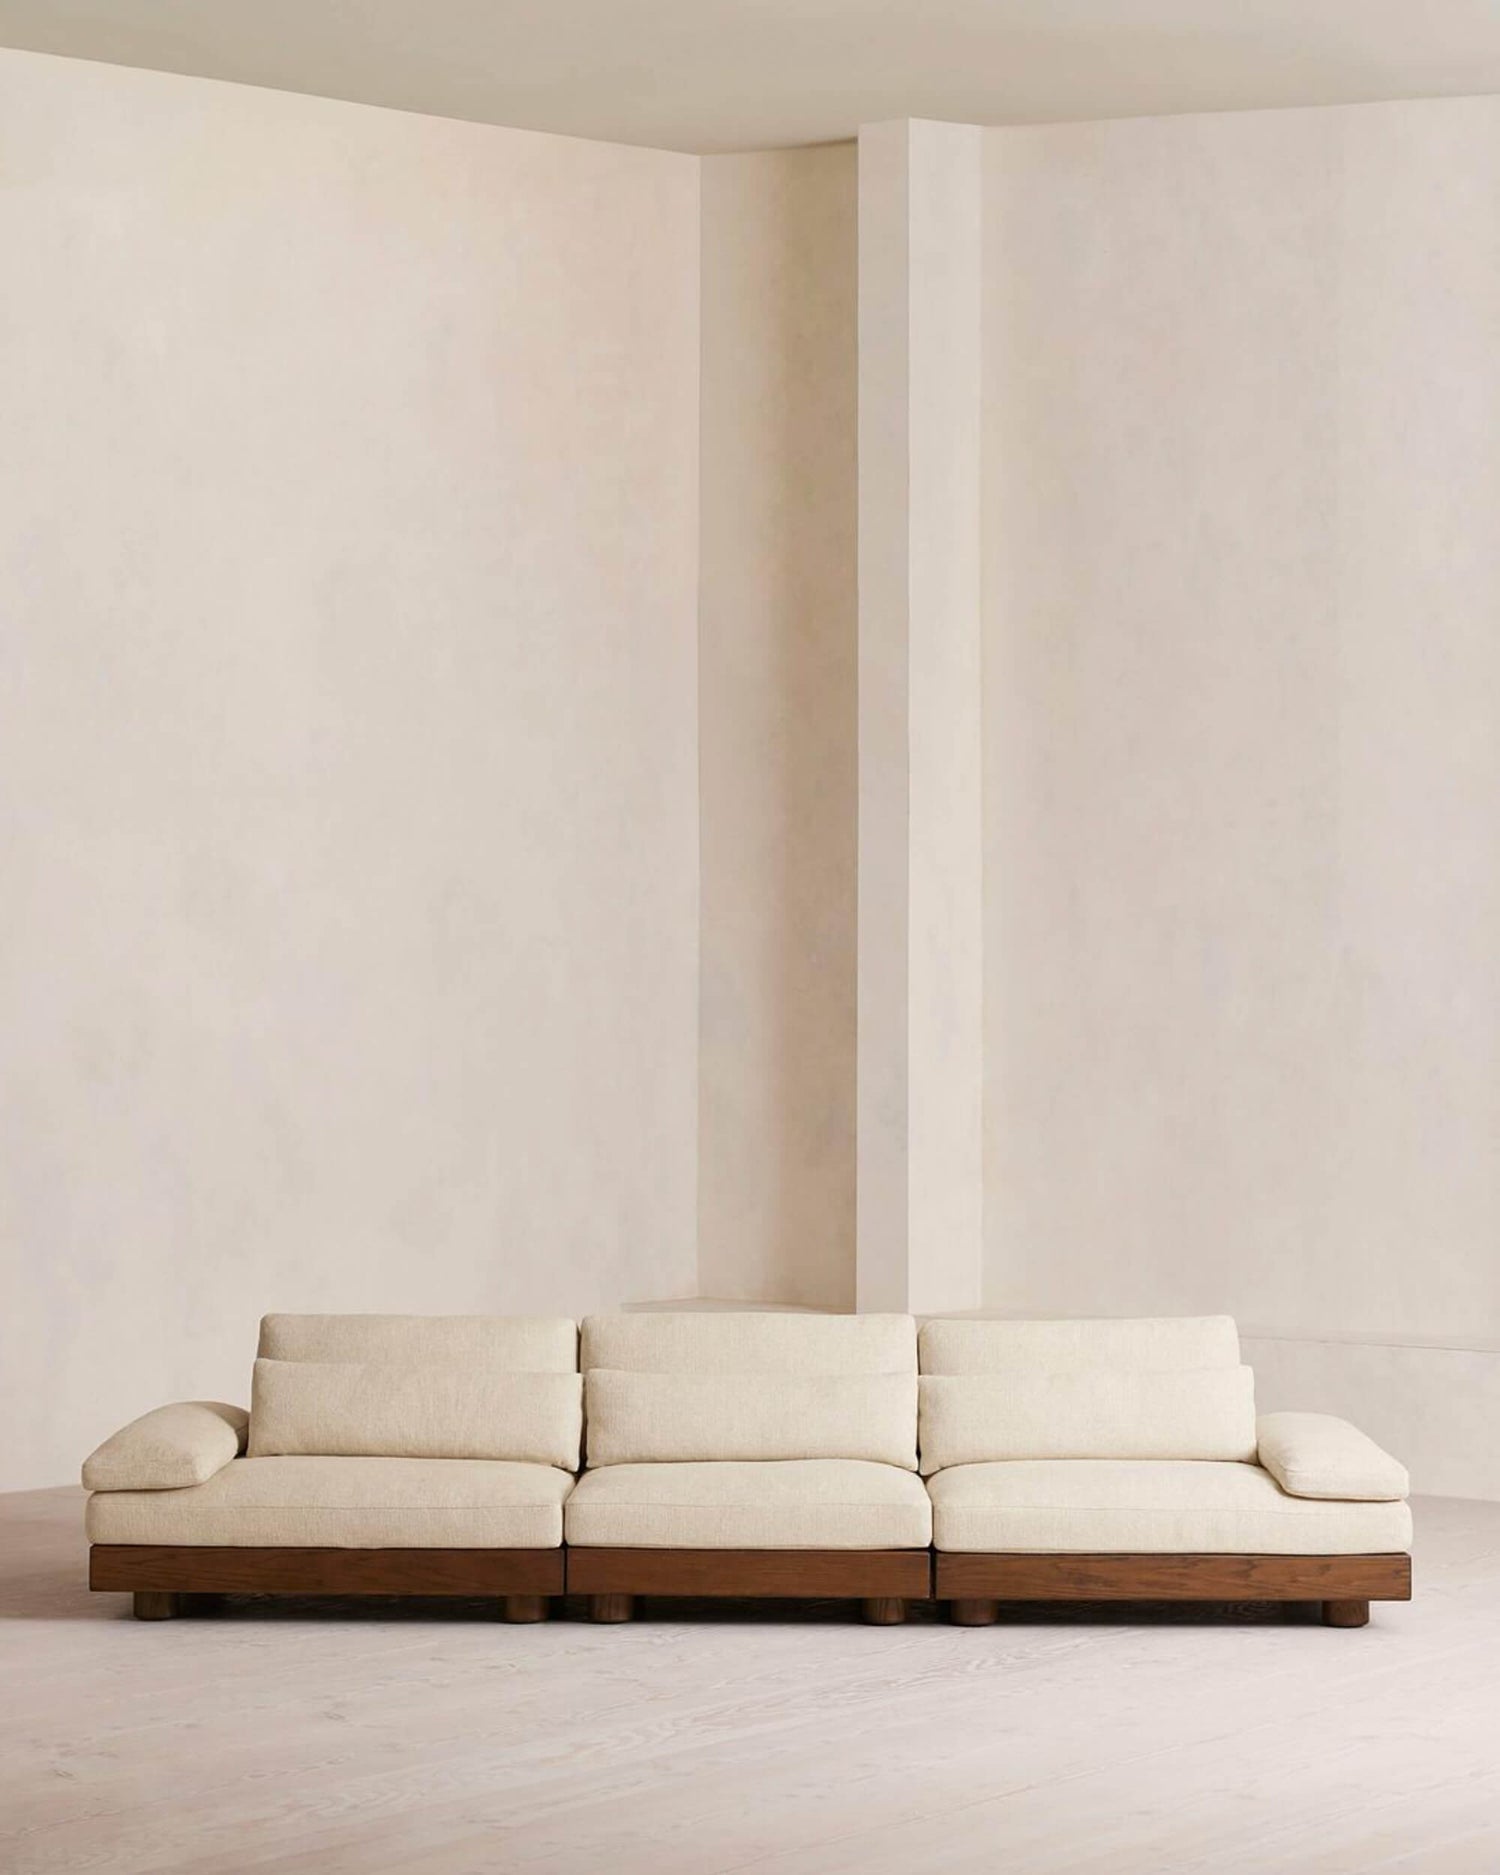 Soho Home Truro Sectional Sofa, Textured Linen